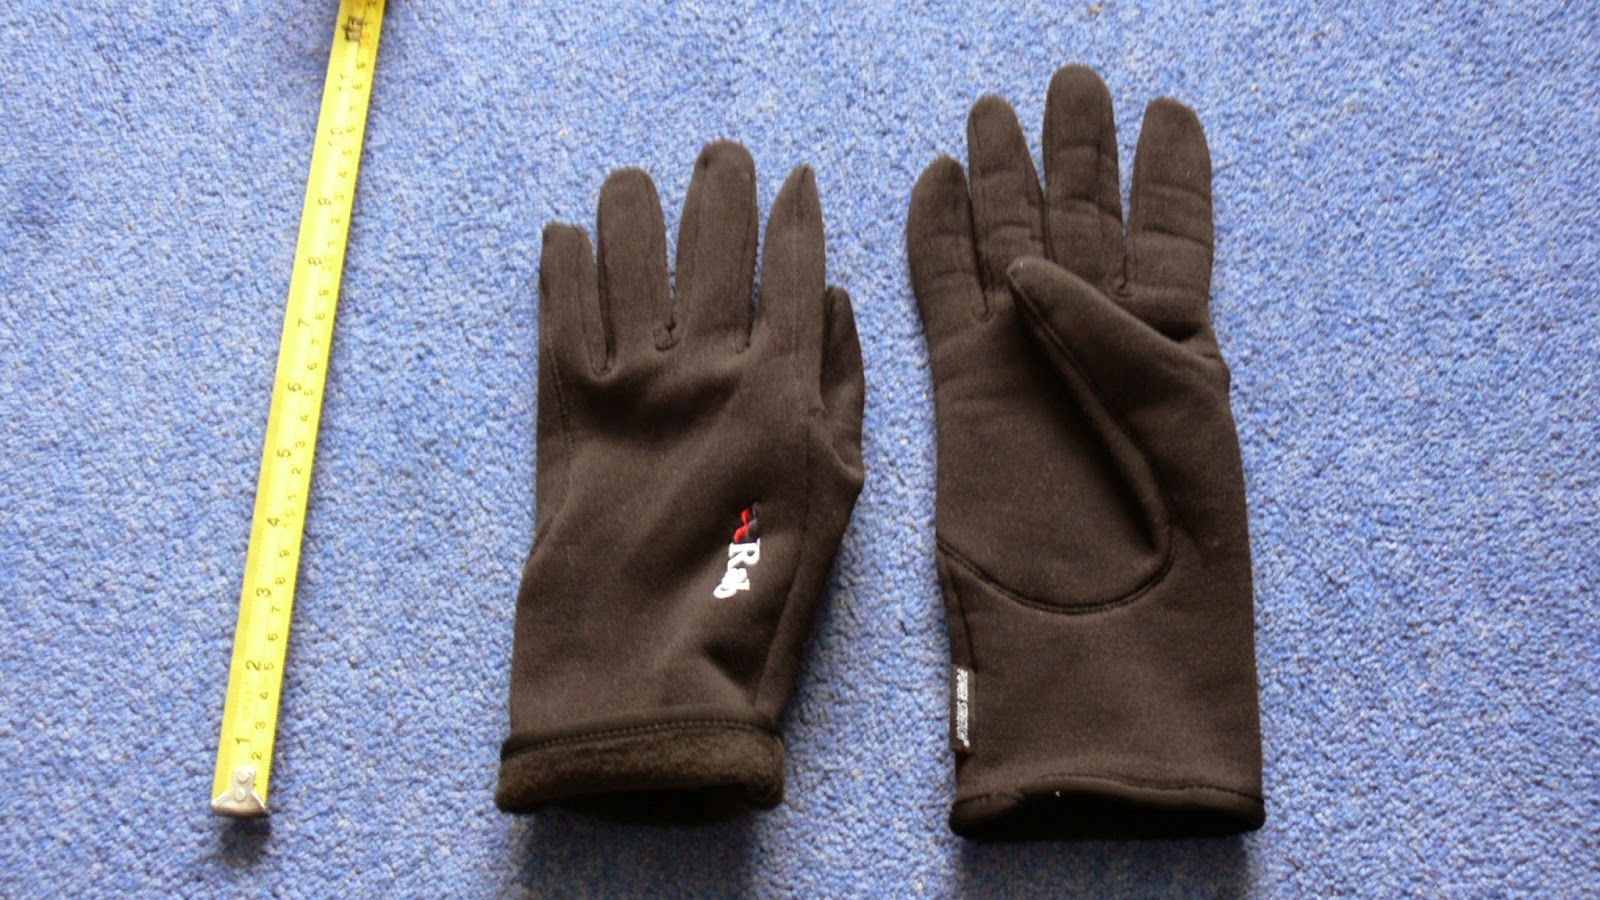 Extremities Silk Power Liner Glove Warm Lightweight Gloves For Outdoors